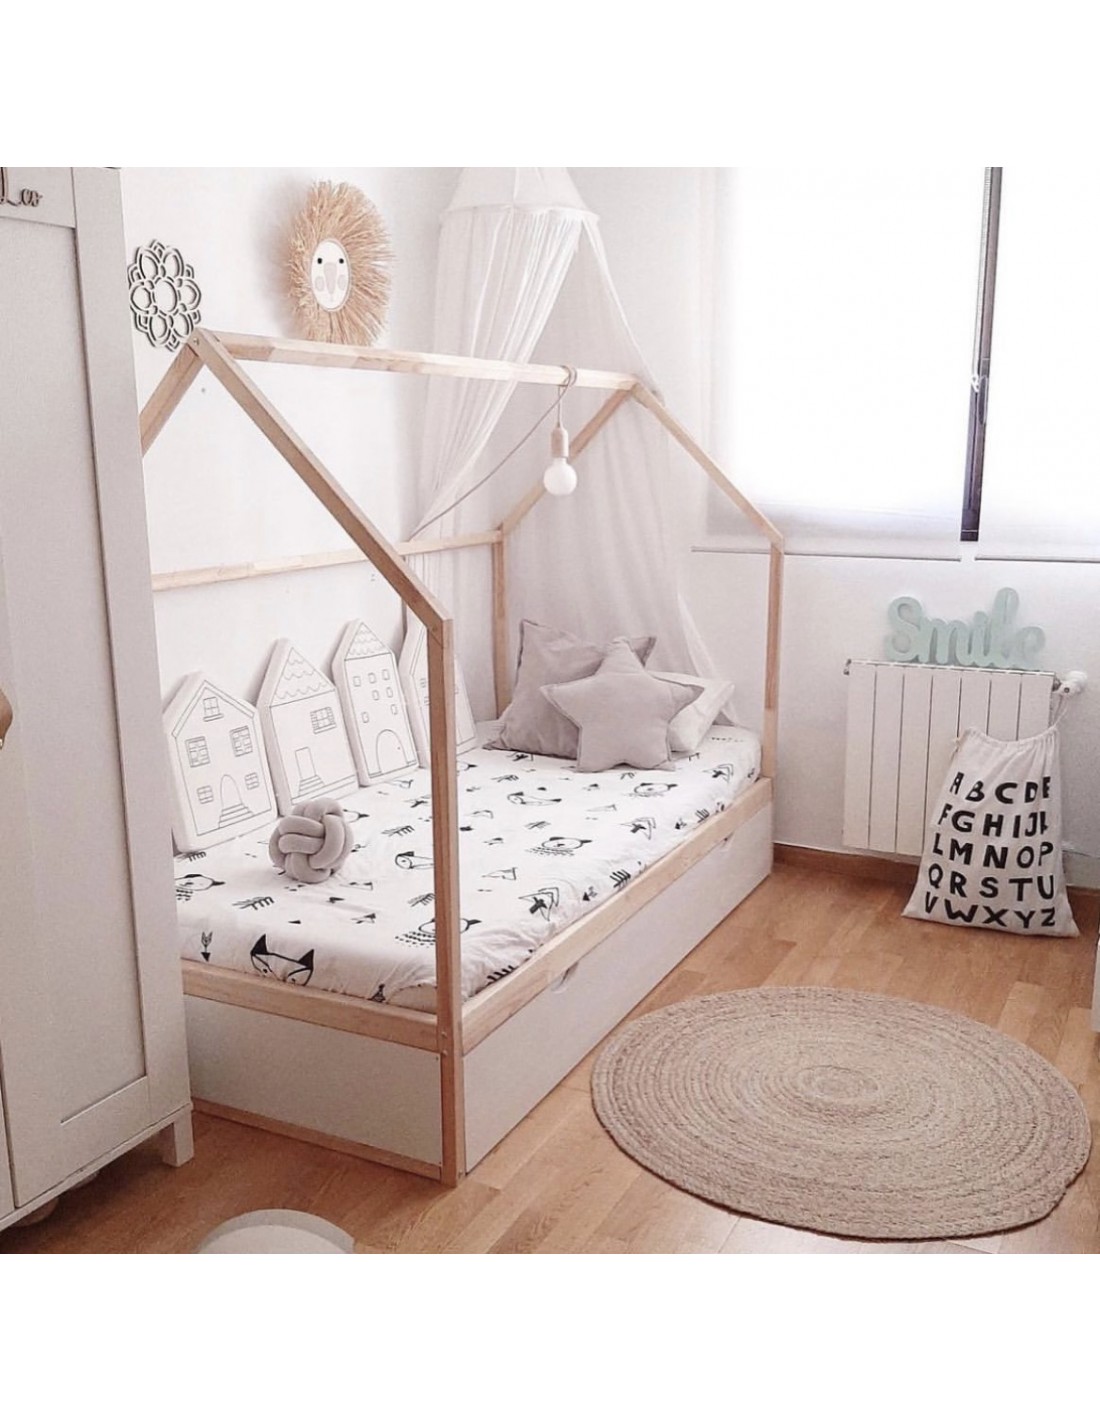 Cama casita infantil nórdica con cama nido inferior.